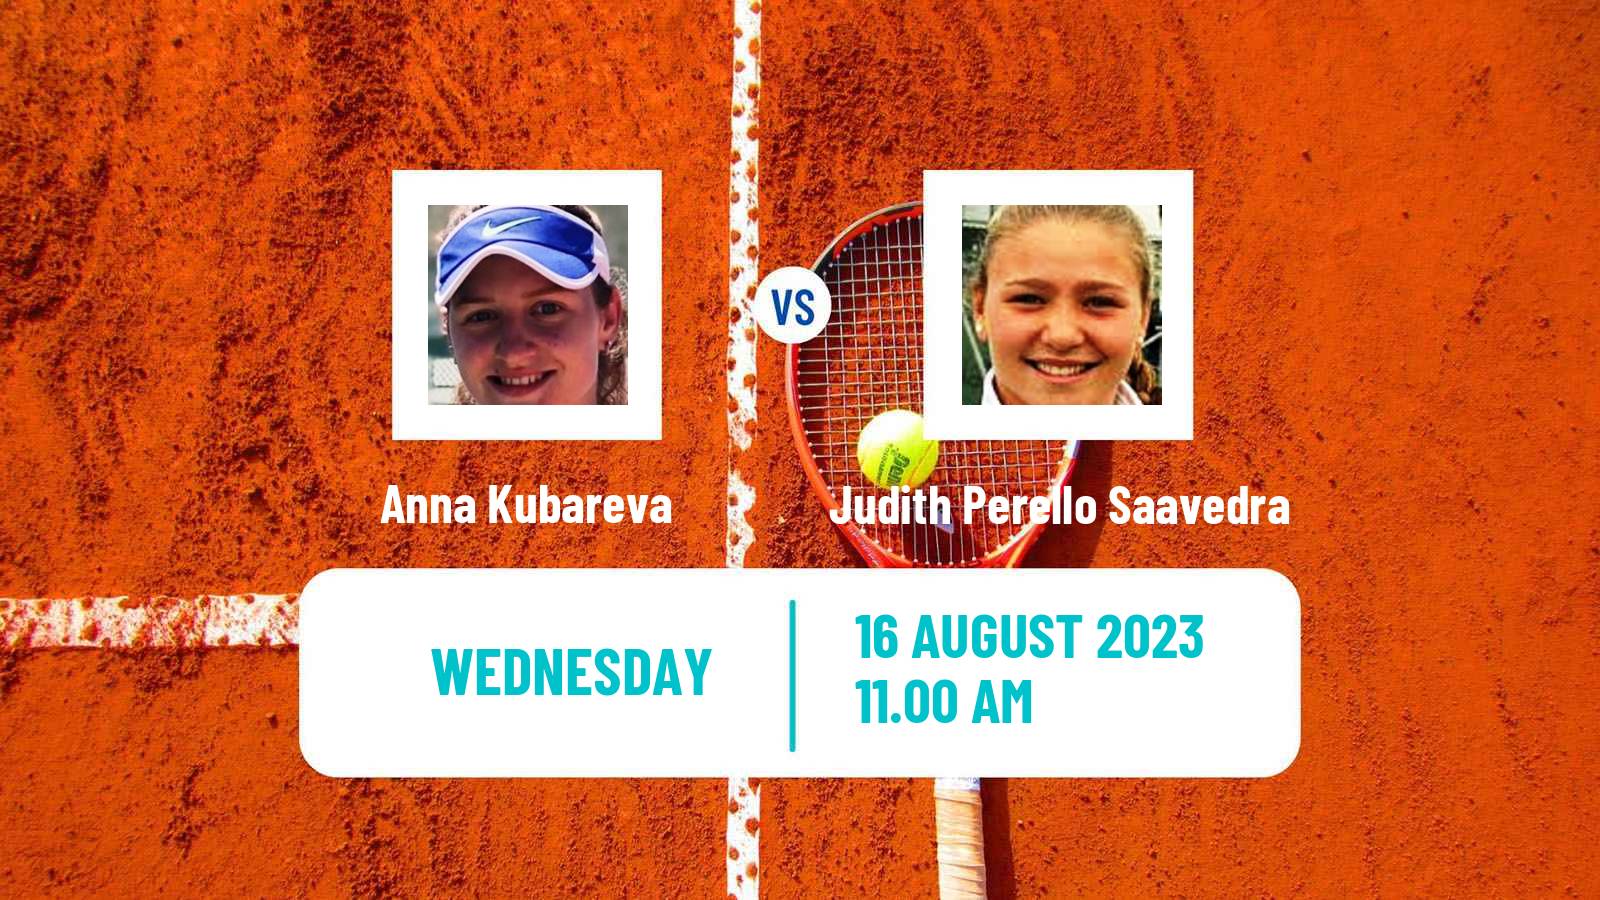 Tennis ITF W25 Ourense Women Anna Kubareva - Judith Perello Saavedra